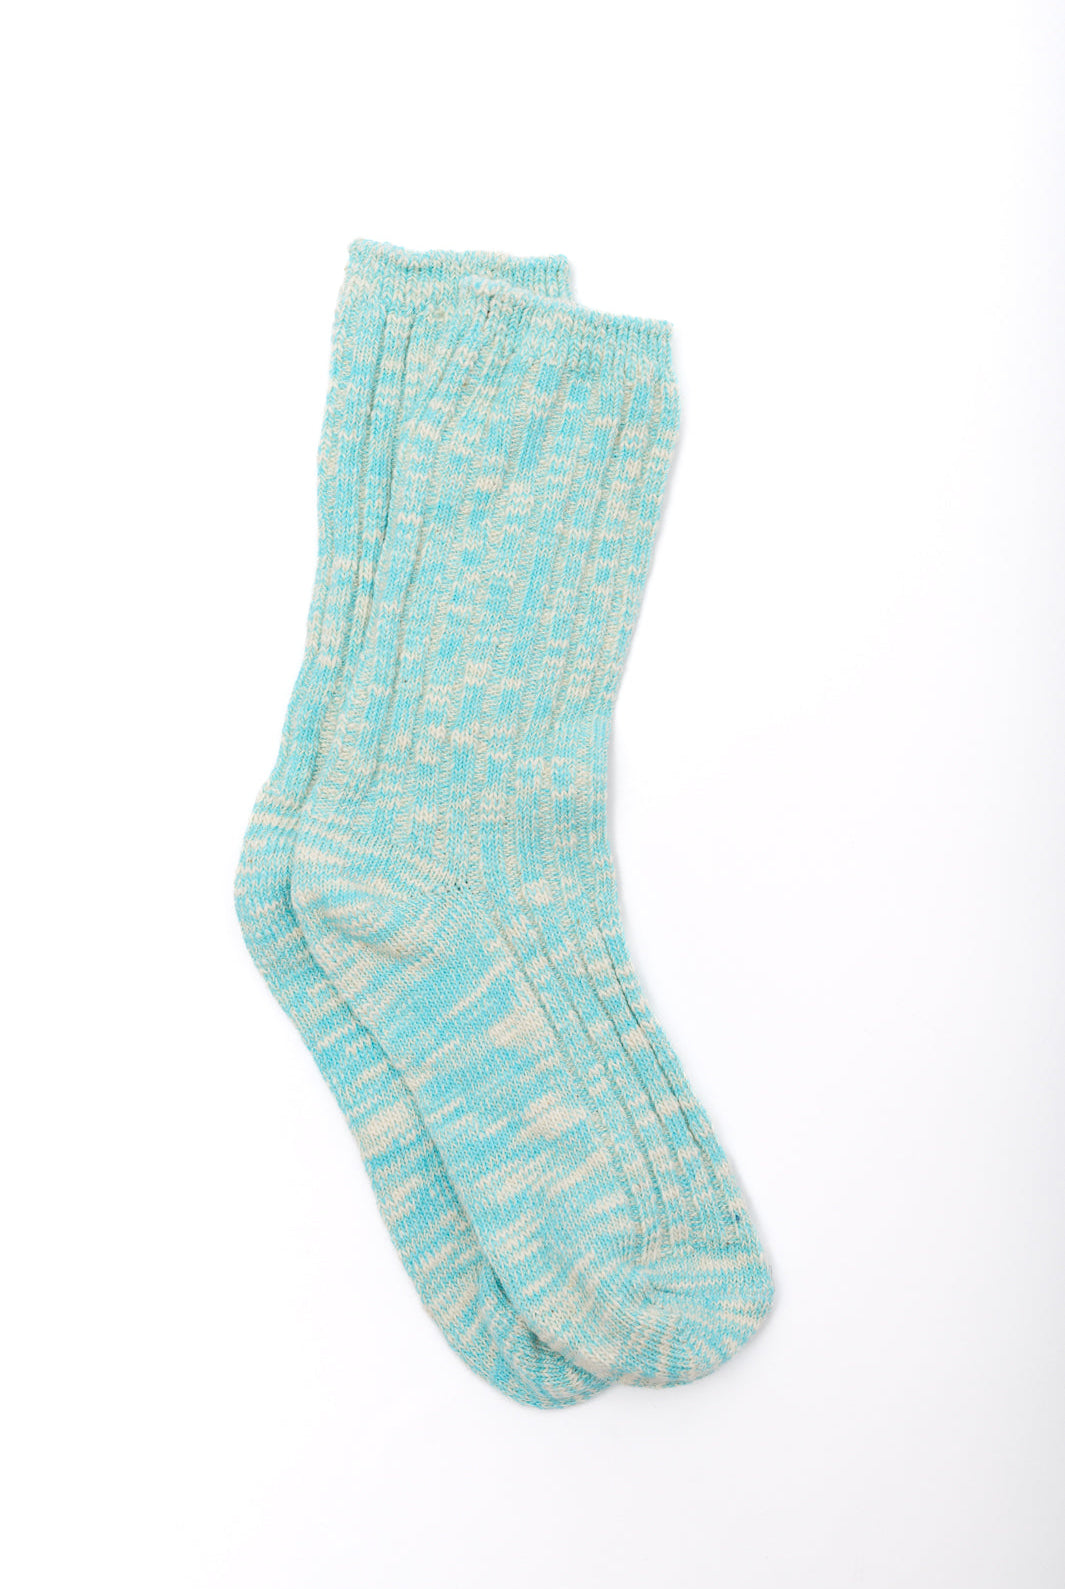 Sweet Socks Heathered Scrunch Socks-Socks-Krush Kandy, Women's Online Fashion Boutique Located in Phoenix, Arizona (Scottsdale Area)